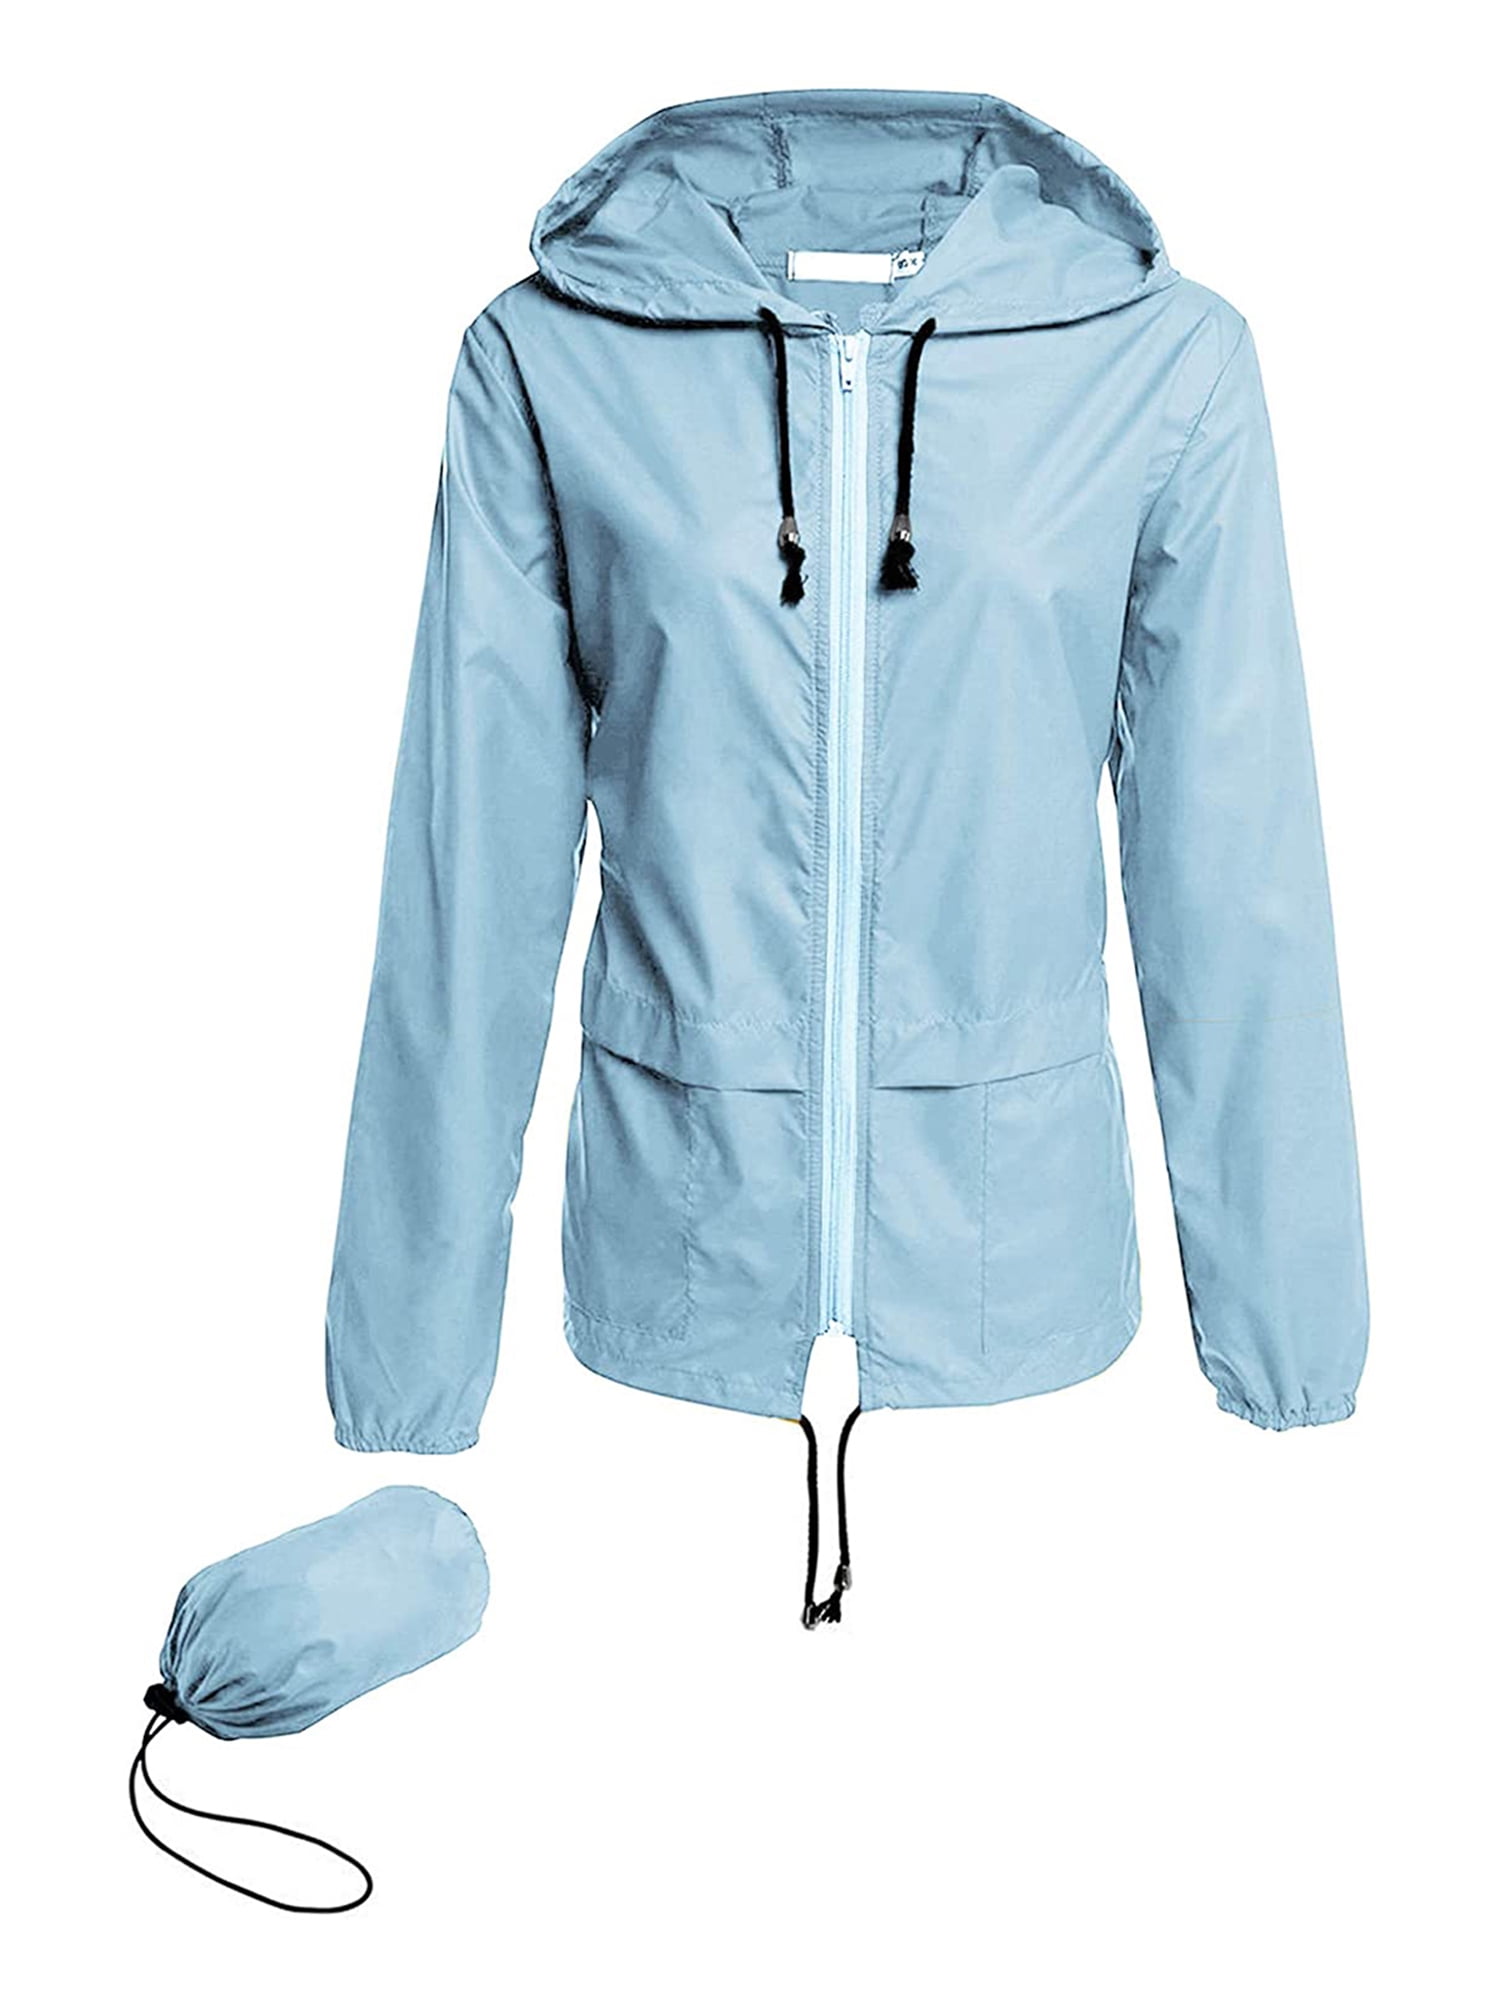 Raincoat for Women Waterproof with Hood Lightweight Blazer Jacket